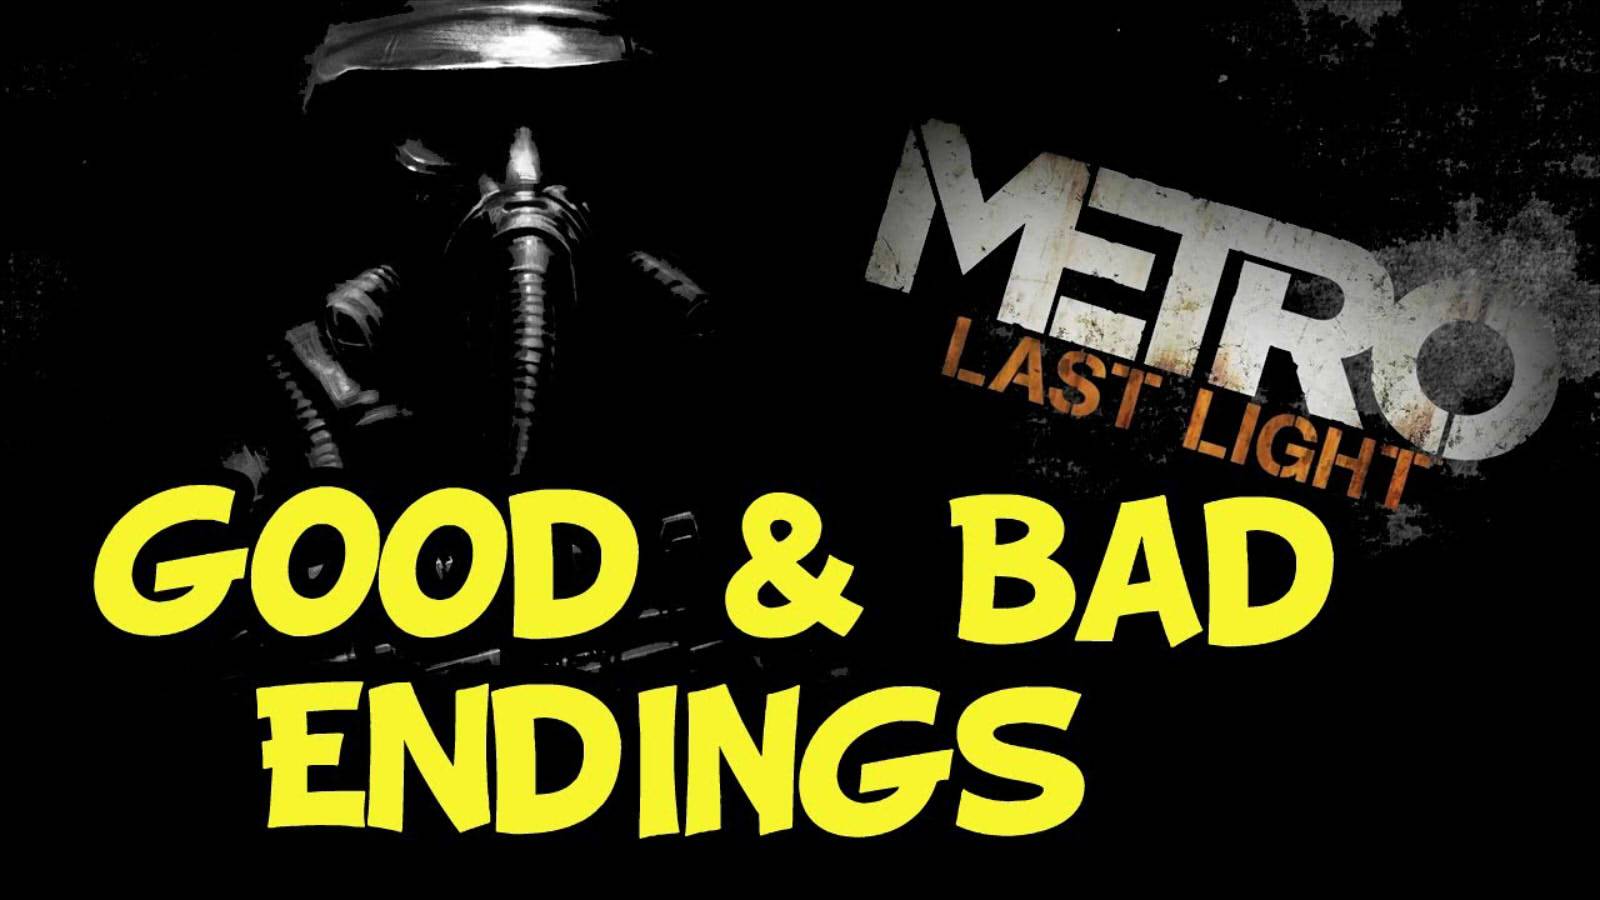 Metro: Last Light "Good & Bad Endings"